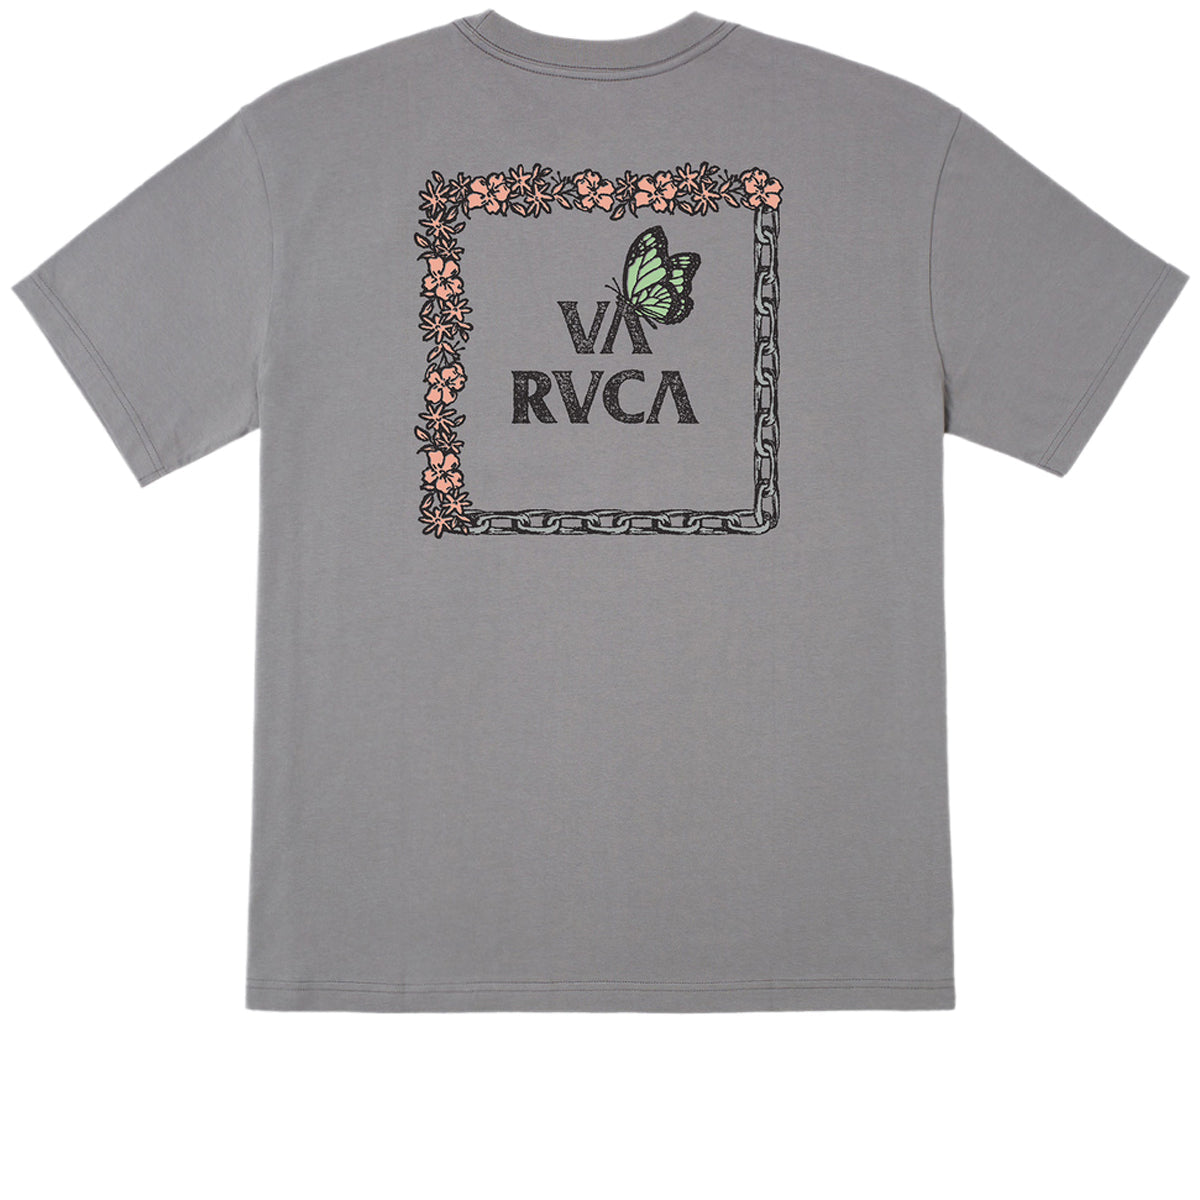 RVCA Food Chain T-Shirt - Motors Grey image 1